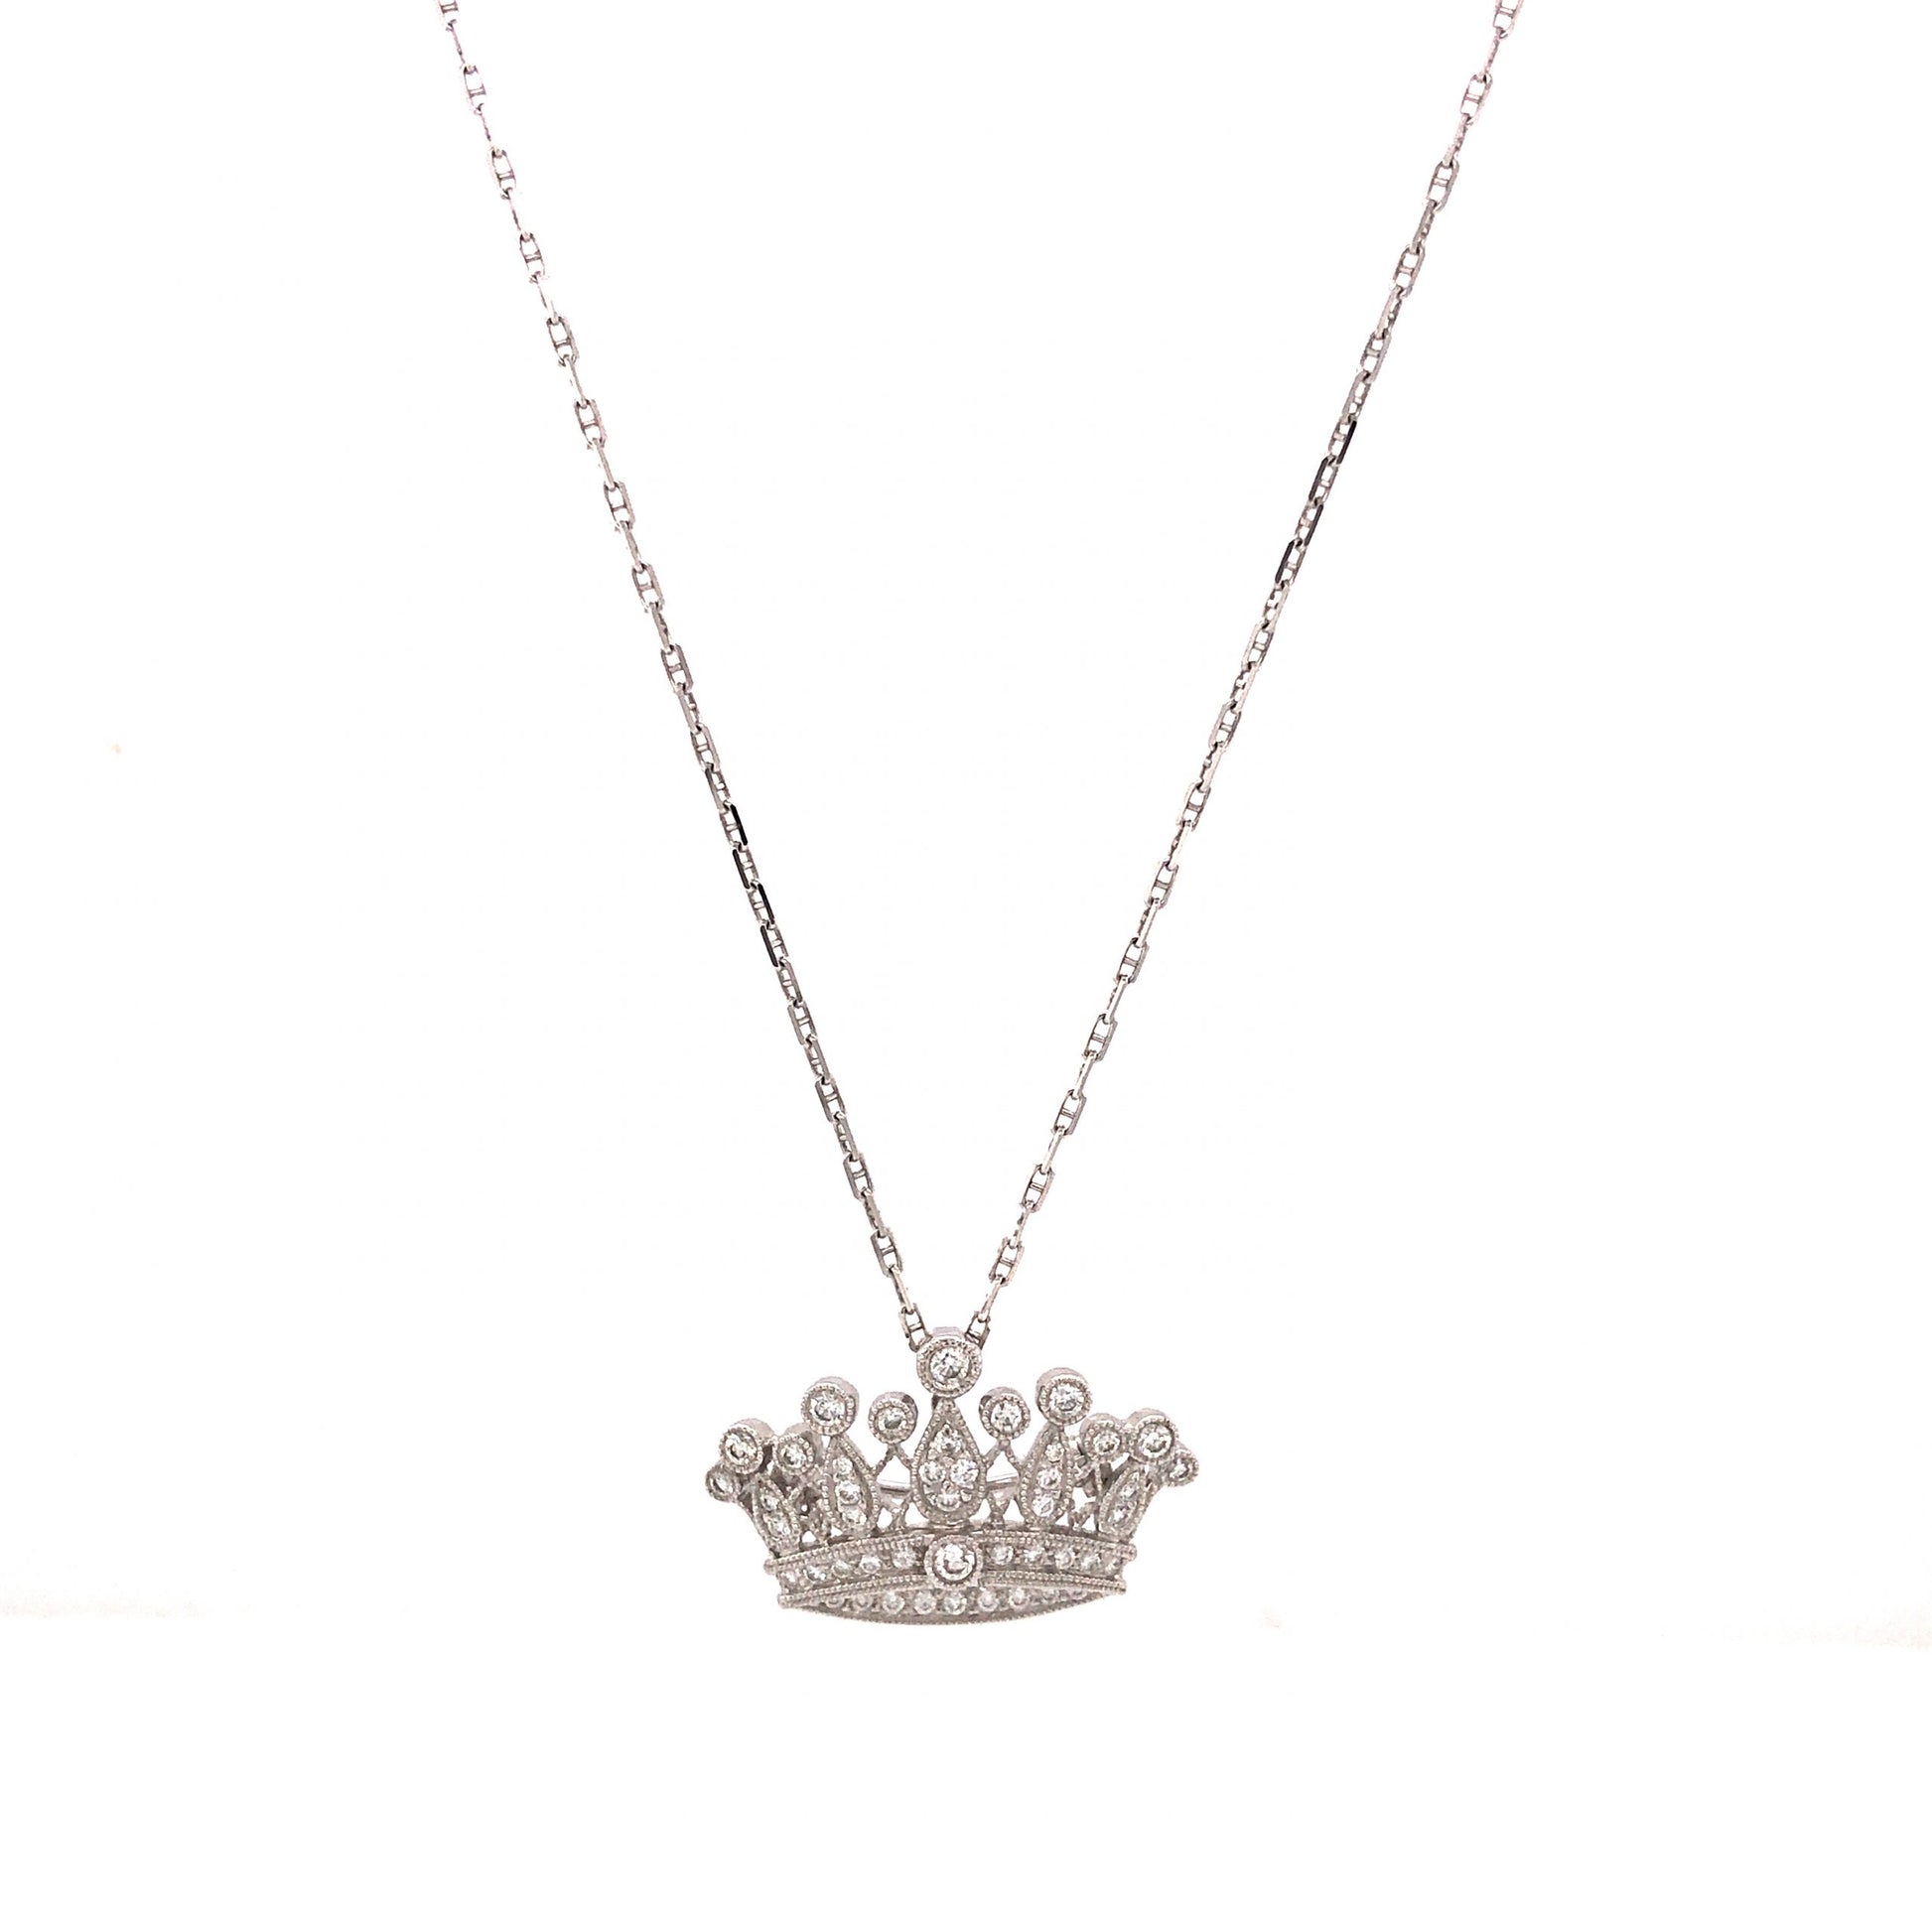 Diamond Crown Pendant Necklace in 18k White GoldComposition: 18 Karat White Gold/14 Karat White Gold Total Diamond Weight: .80ct Total Gram Weight: 6.4 g Inscription: 14k BERGMAN (Chain) 750 (Pendant)
      